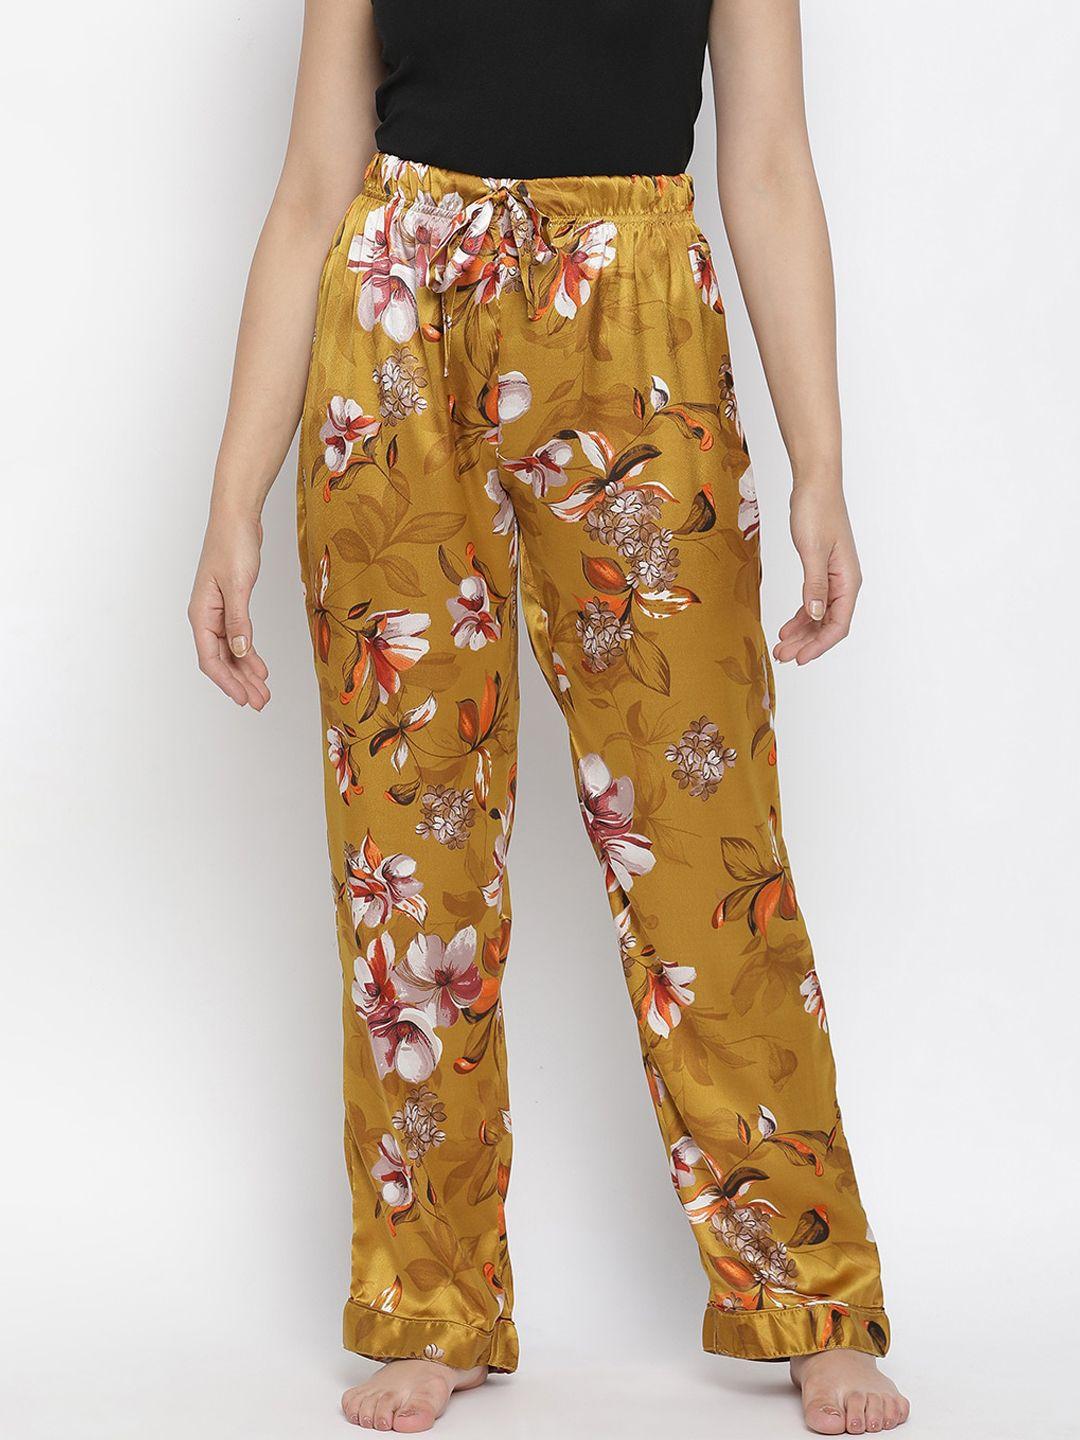 oxolloxo women floral print nightwear pajama